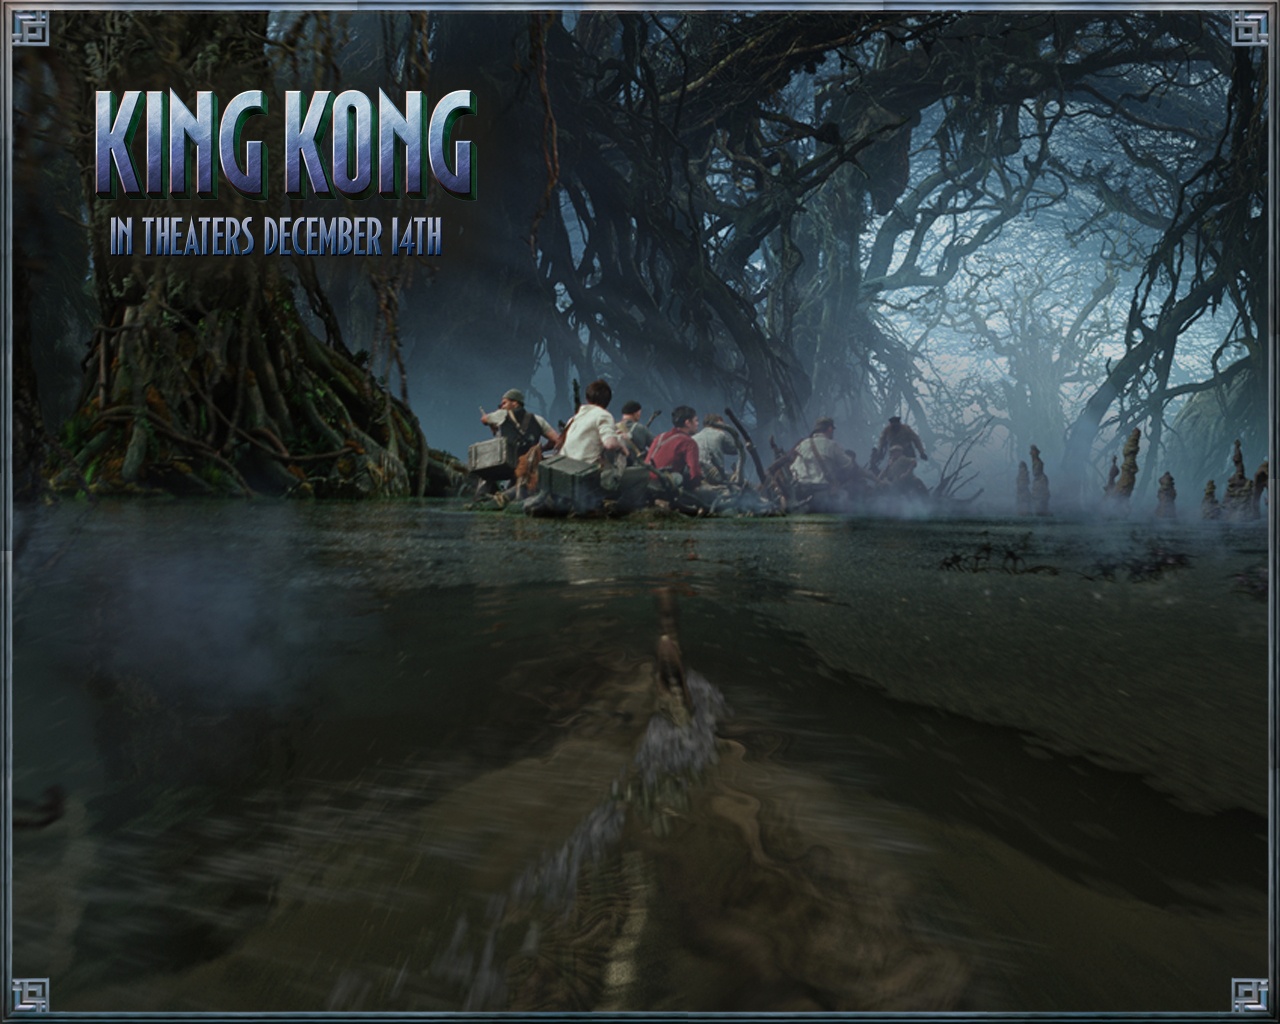 King Kong Fondos De Pantalla Fotos Gratis